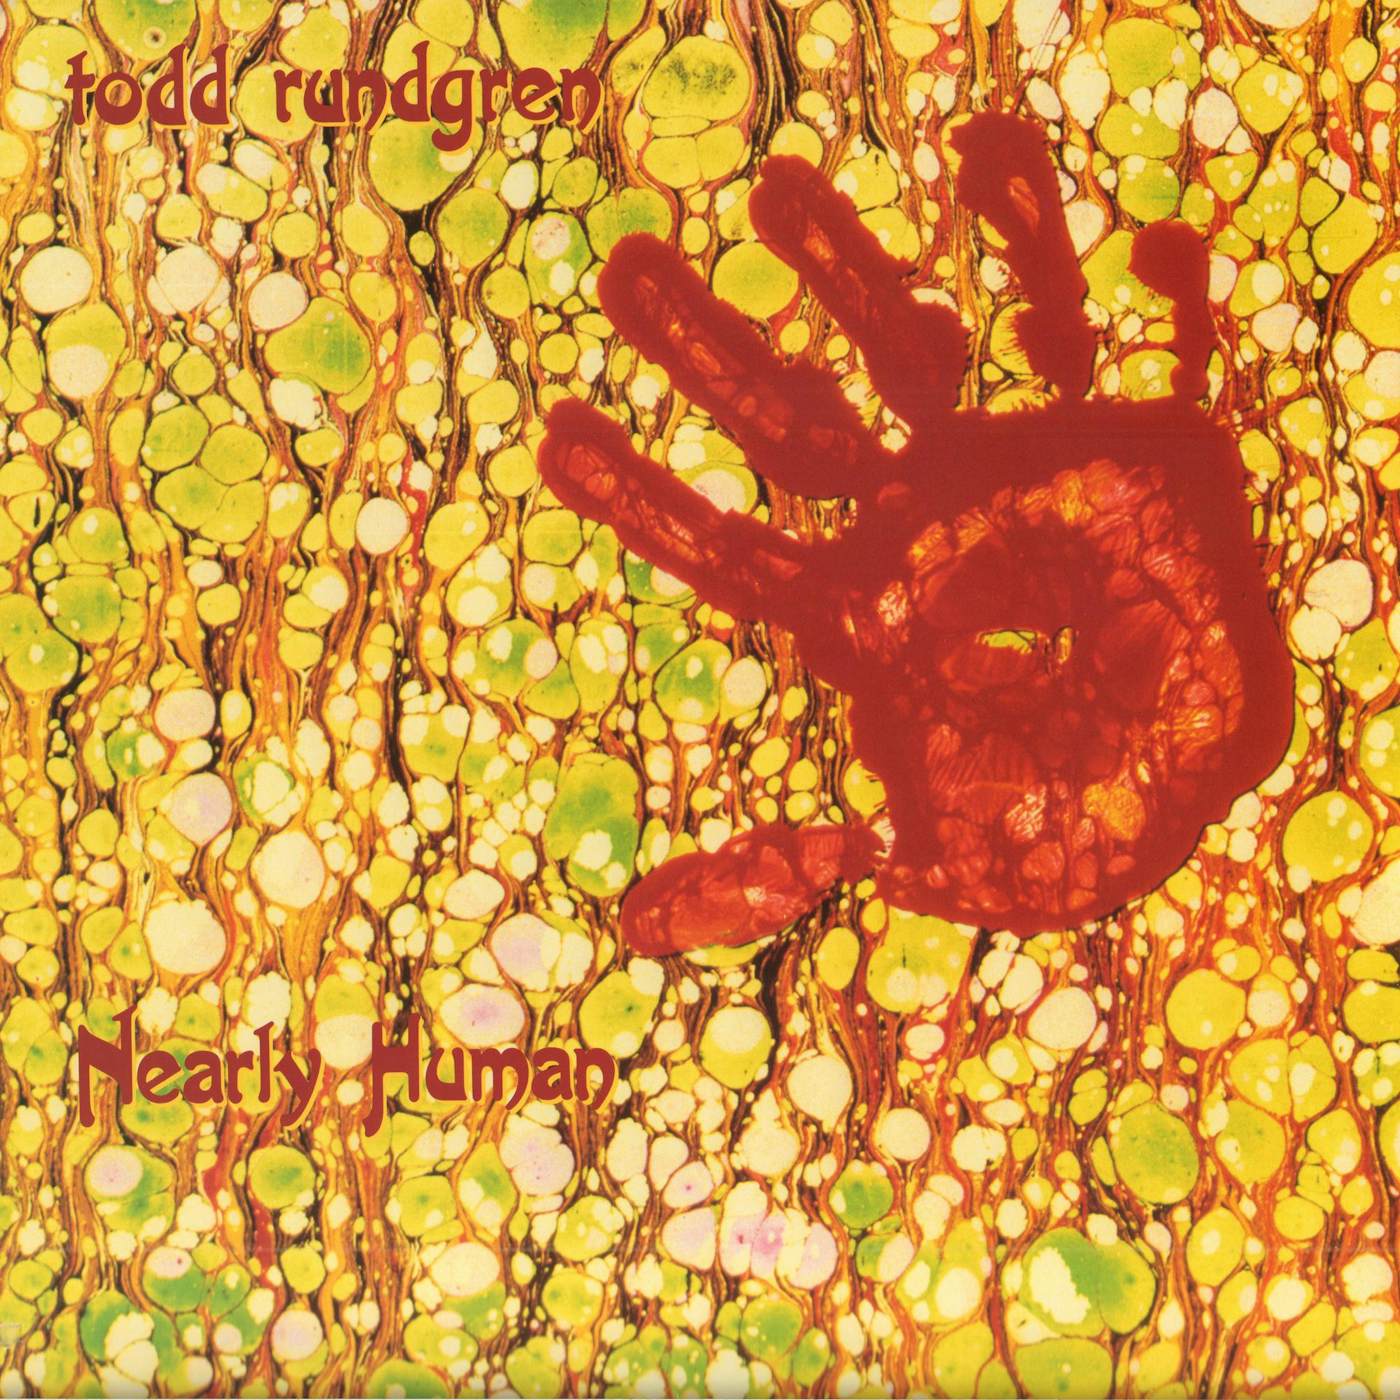 Todd Rundgren NEARLY HUMAN (180G/TRANSLUCENT YELLOW VINYL/LIMITED TOUR EDITION) Vinyl Record